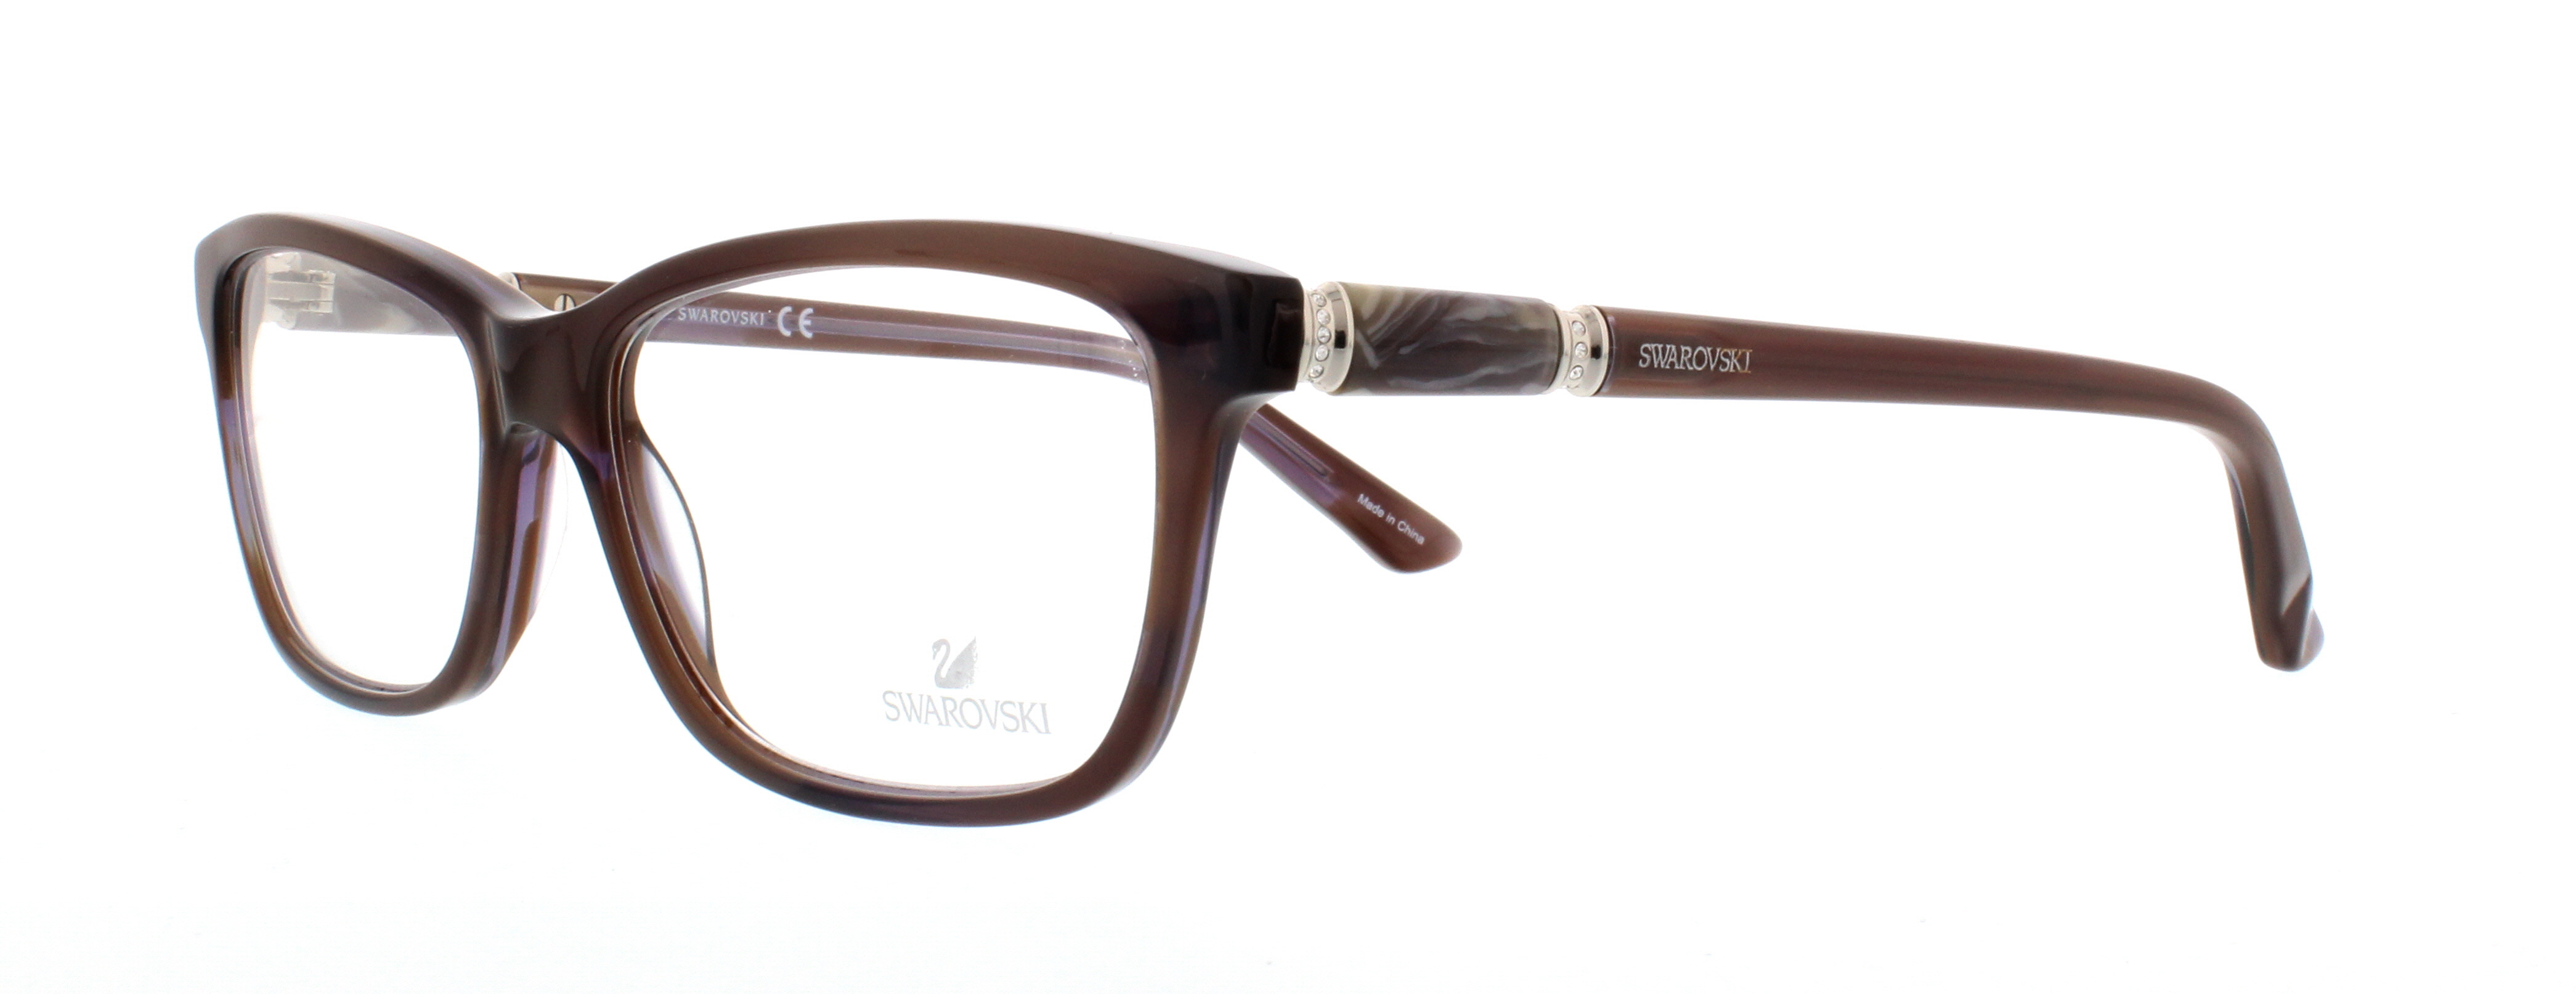 Picture of Swarovski Eyeglasses SK5158 Flame